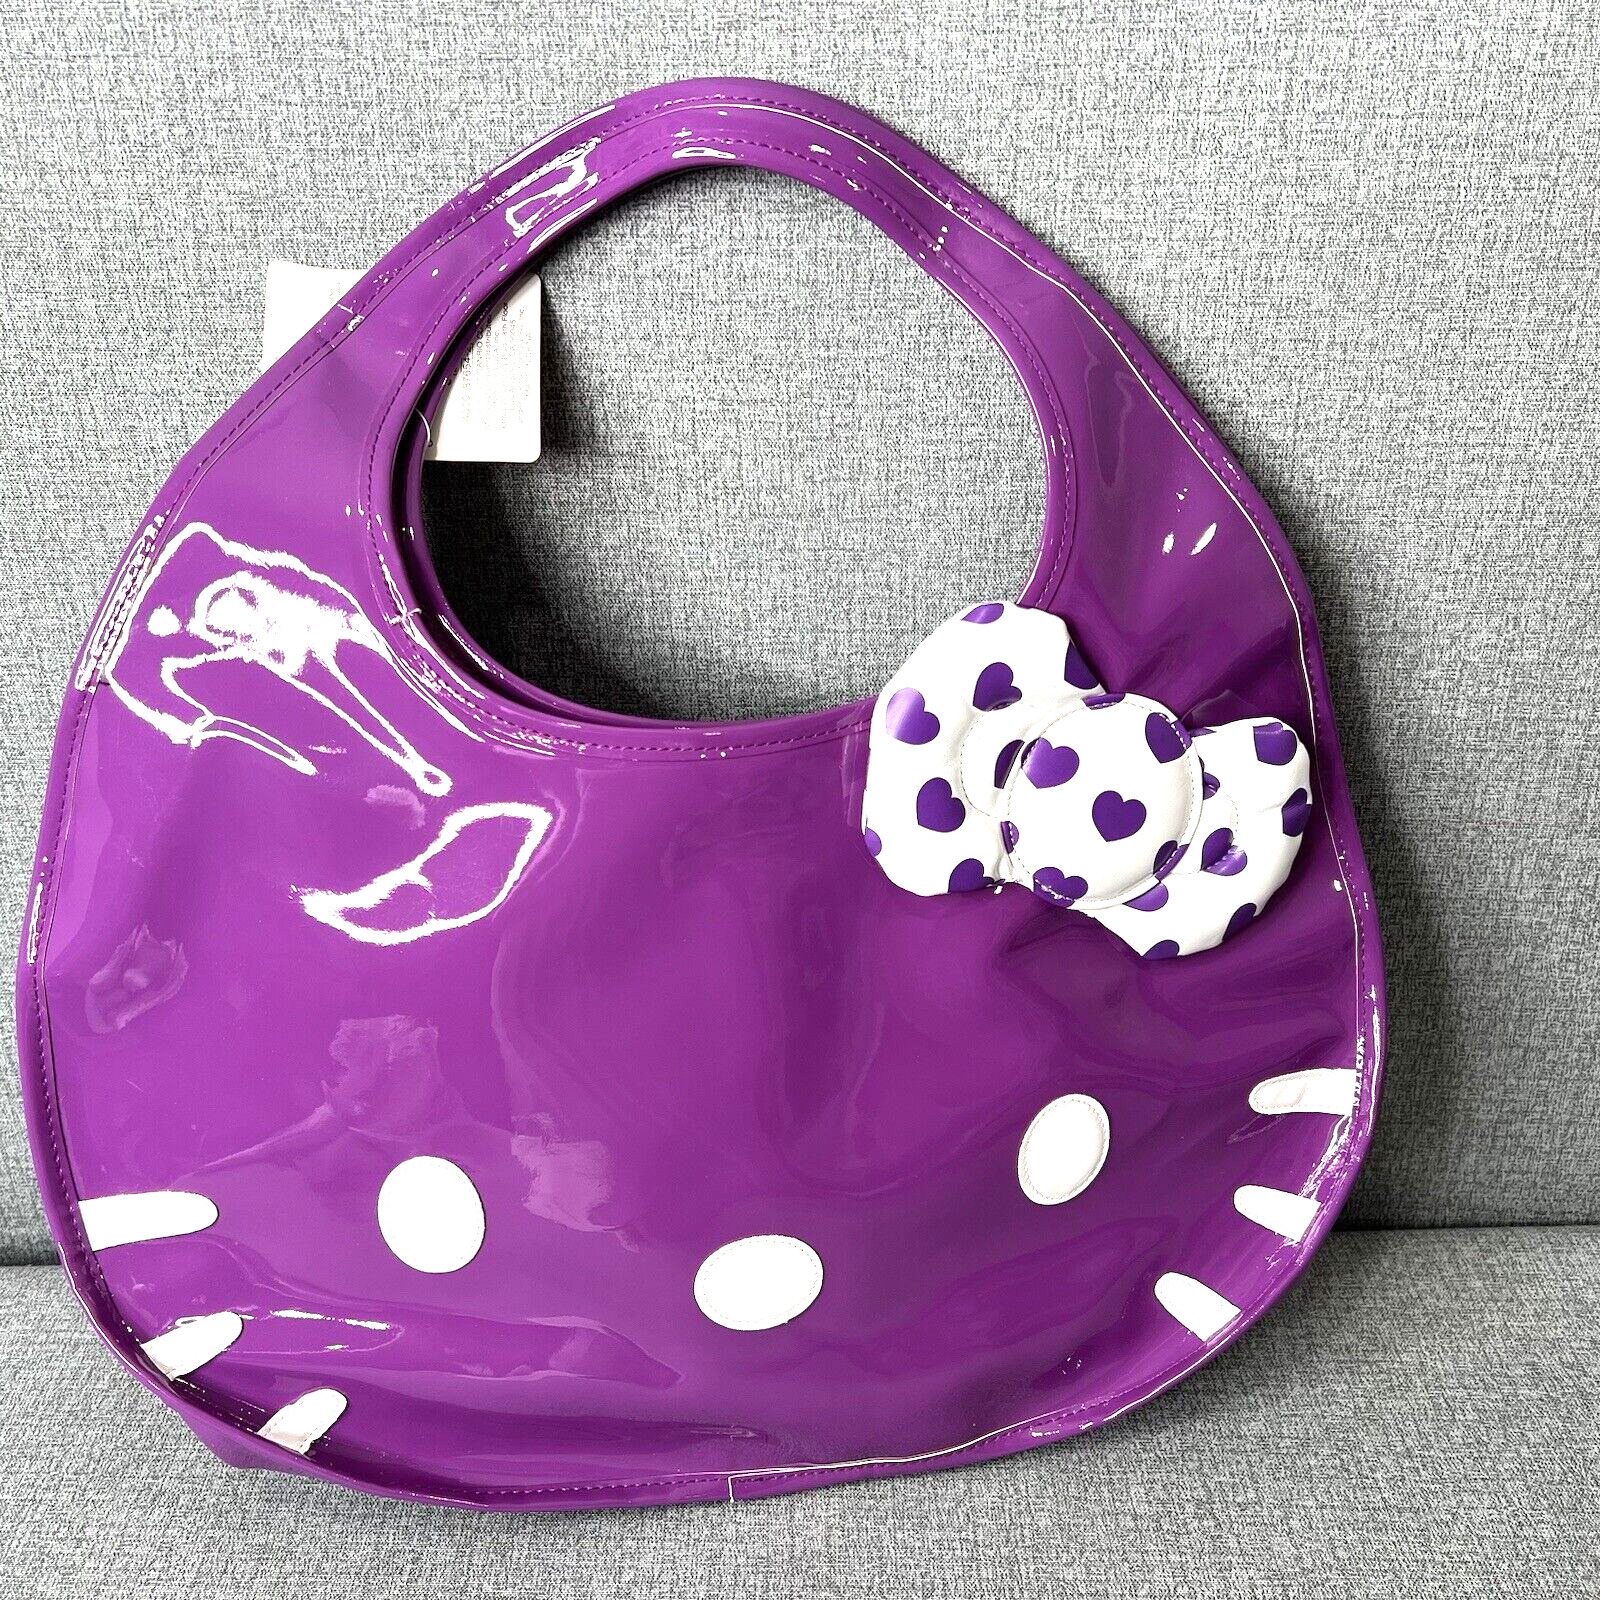 Sanrio Hello Kitty Bag 2011 Purple Hand Bag Purse Tote Rare New